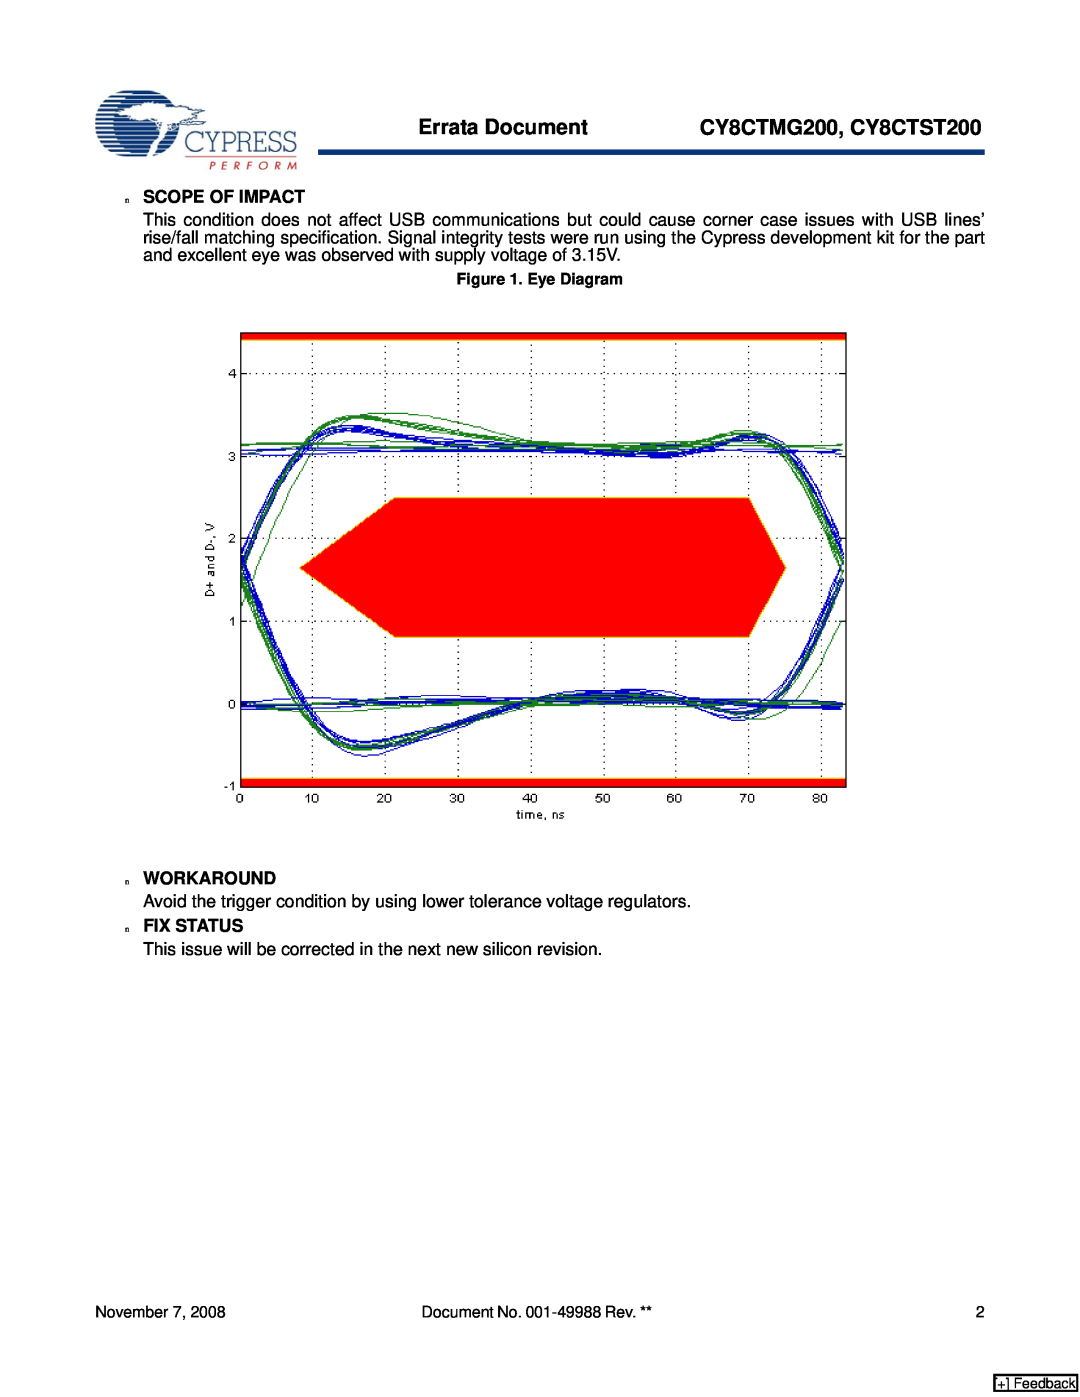 Cypress manual Errata Document, CY8CTMG200, CY8CTST200, Eye Diagram 